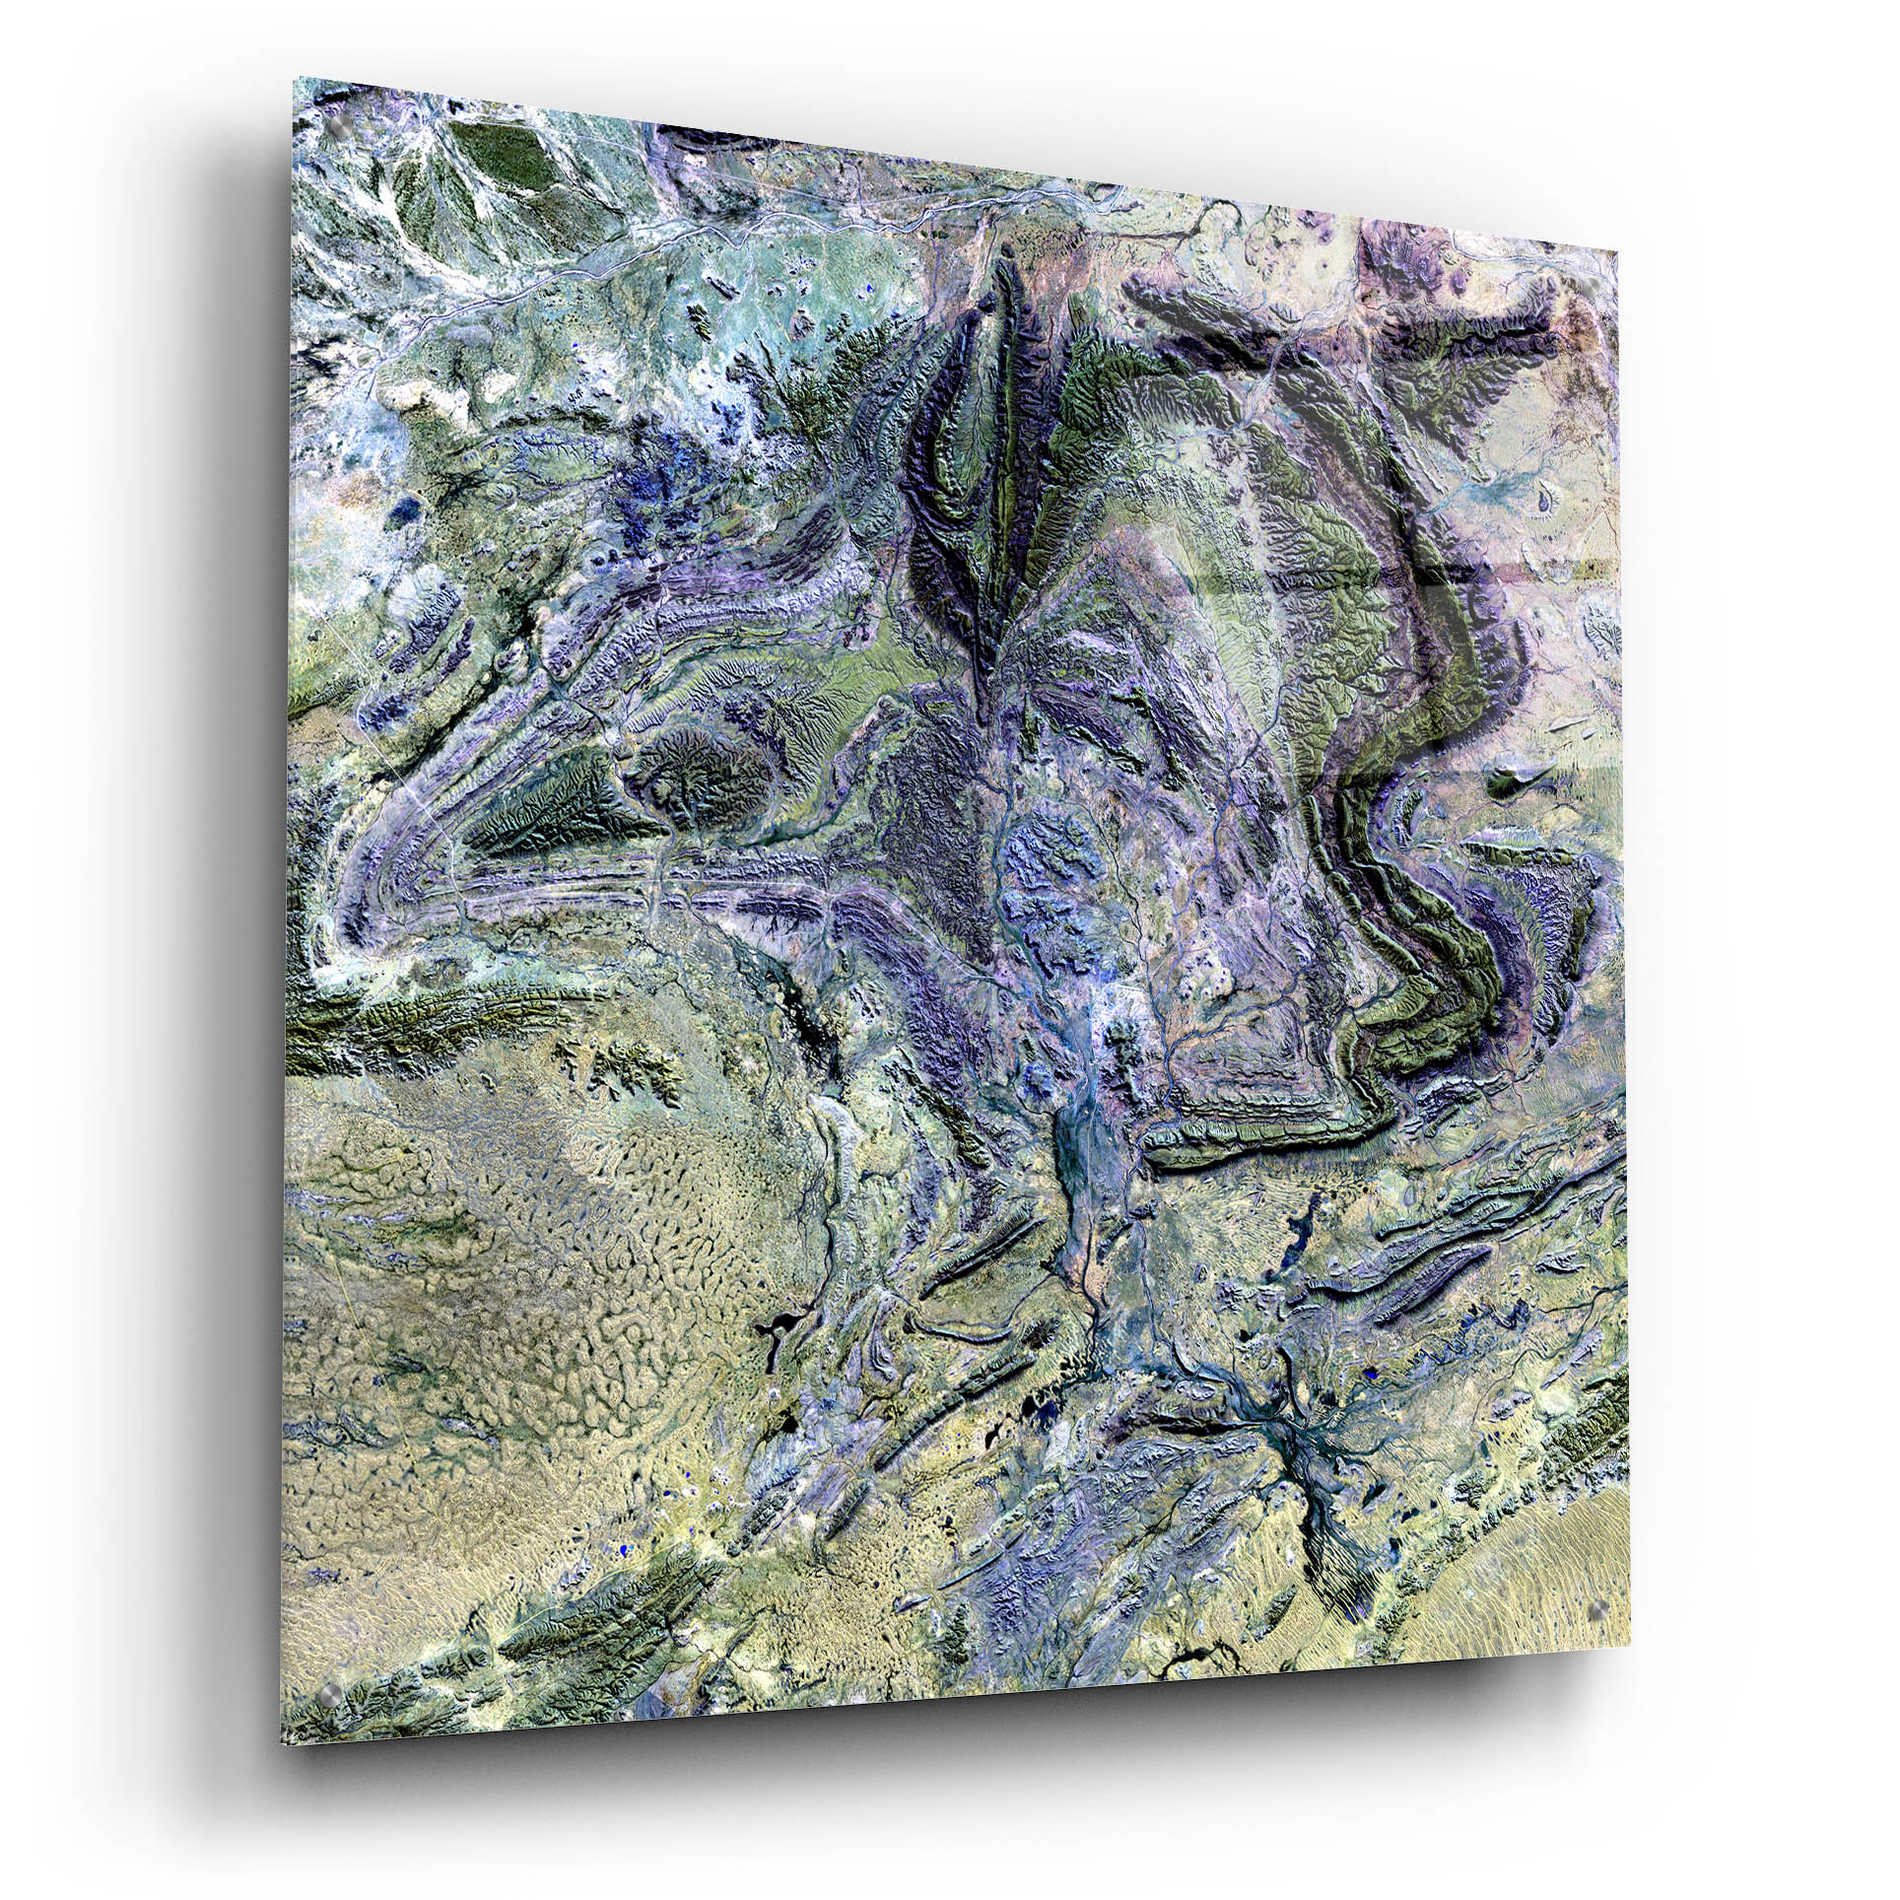 Epic Art 'Earth as Art: MacDonnel Ranges' Acrylic Glass Wall Art,36x36